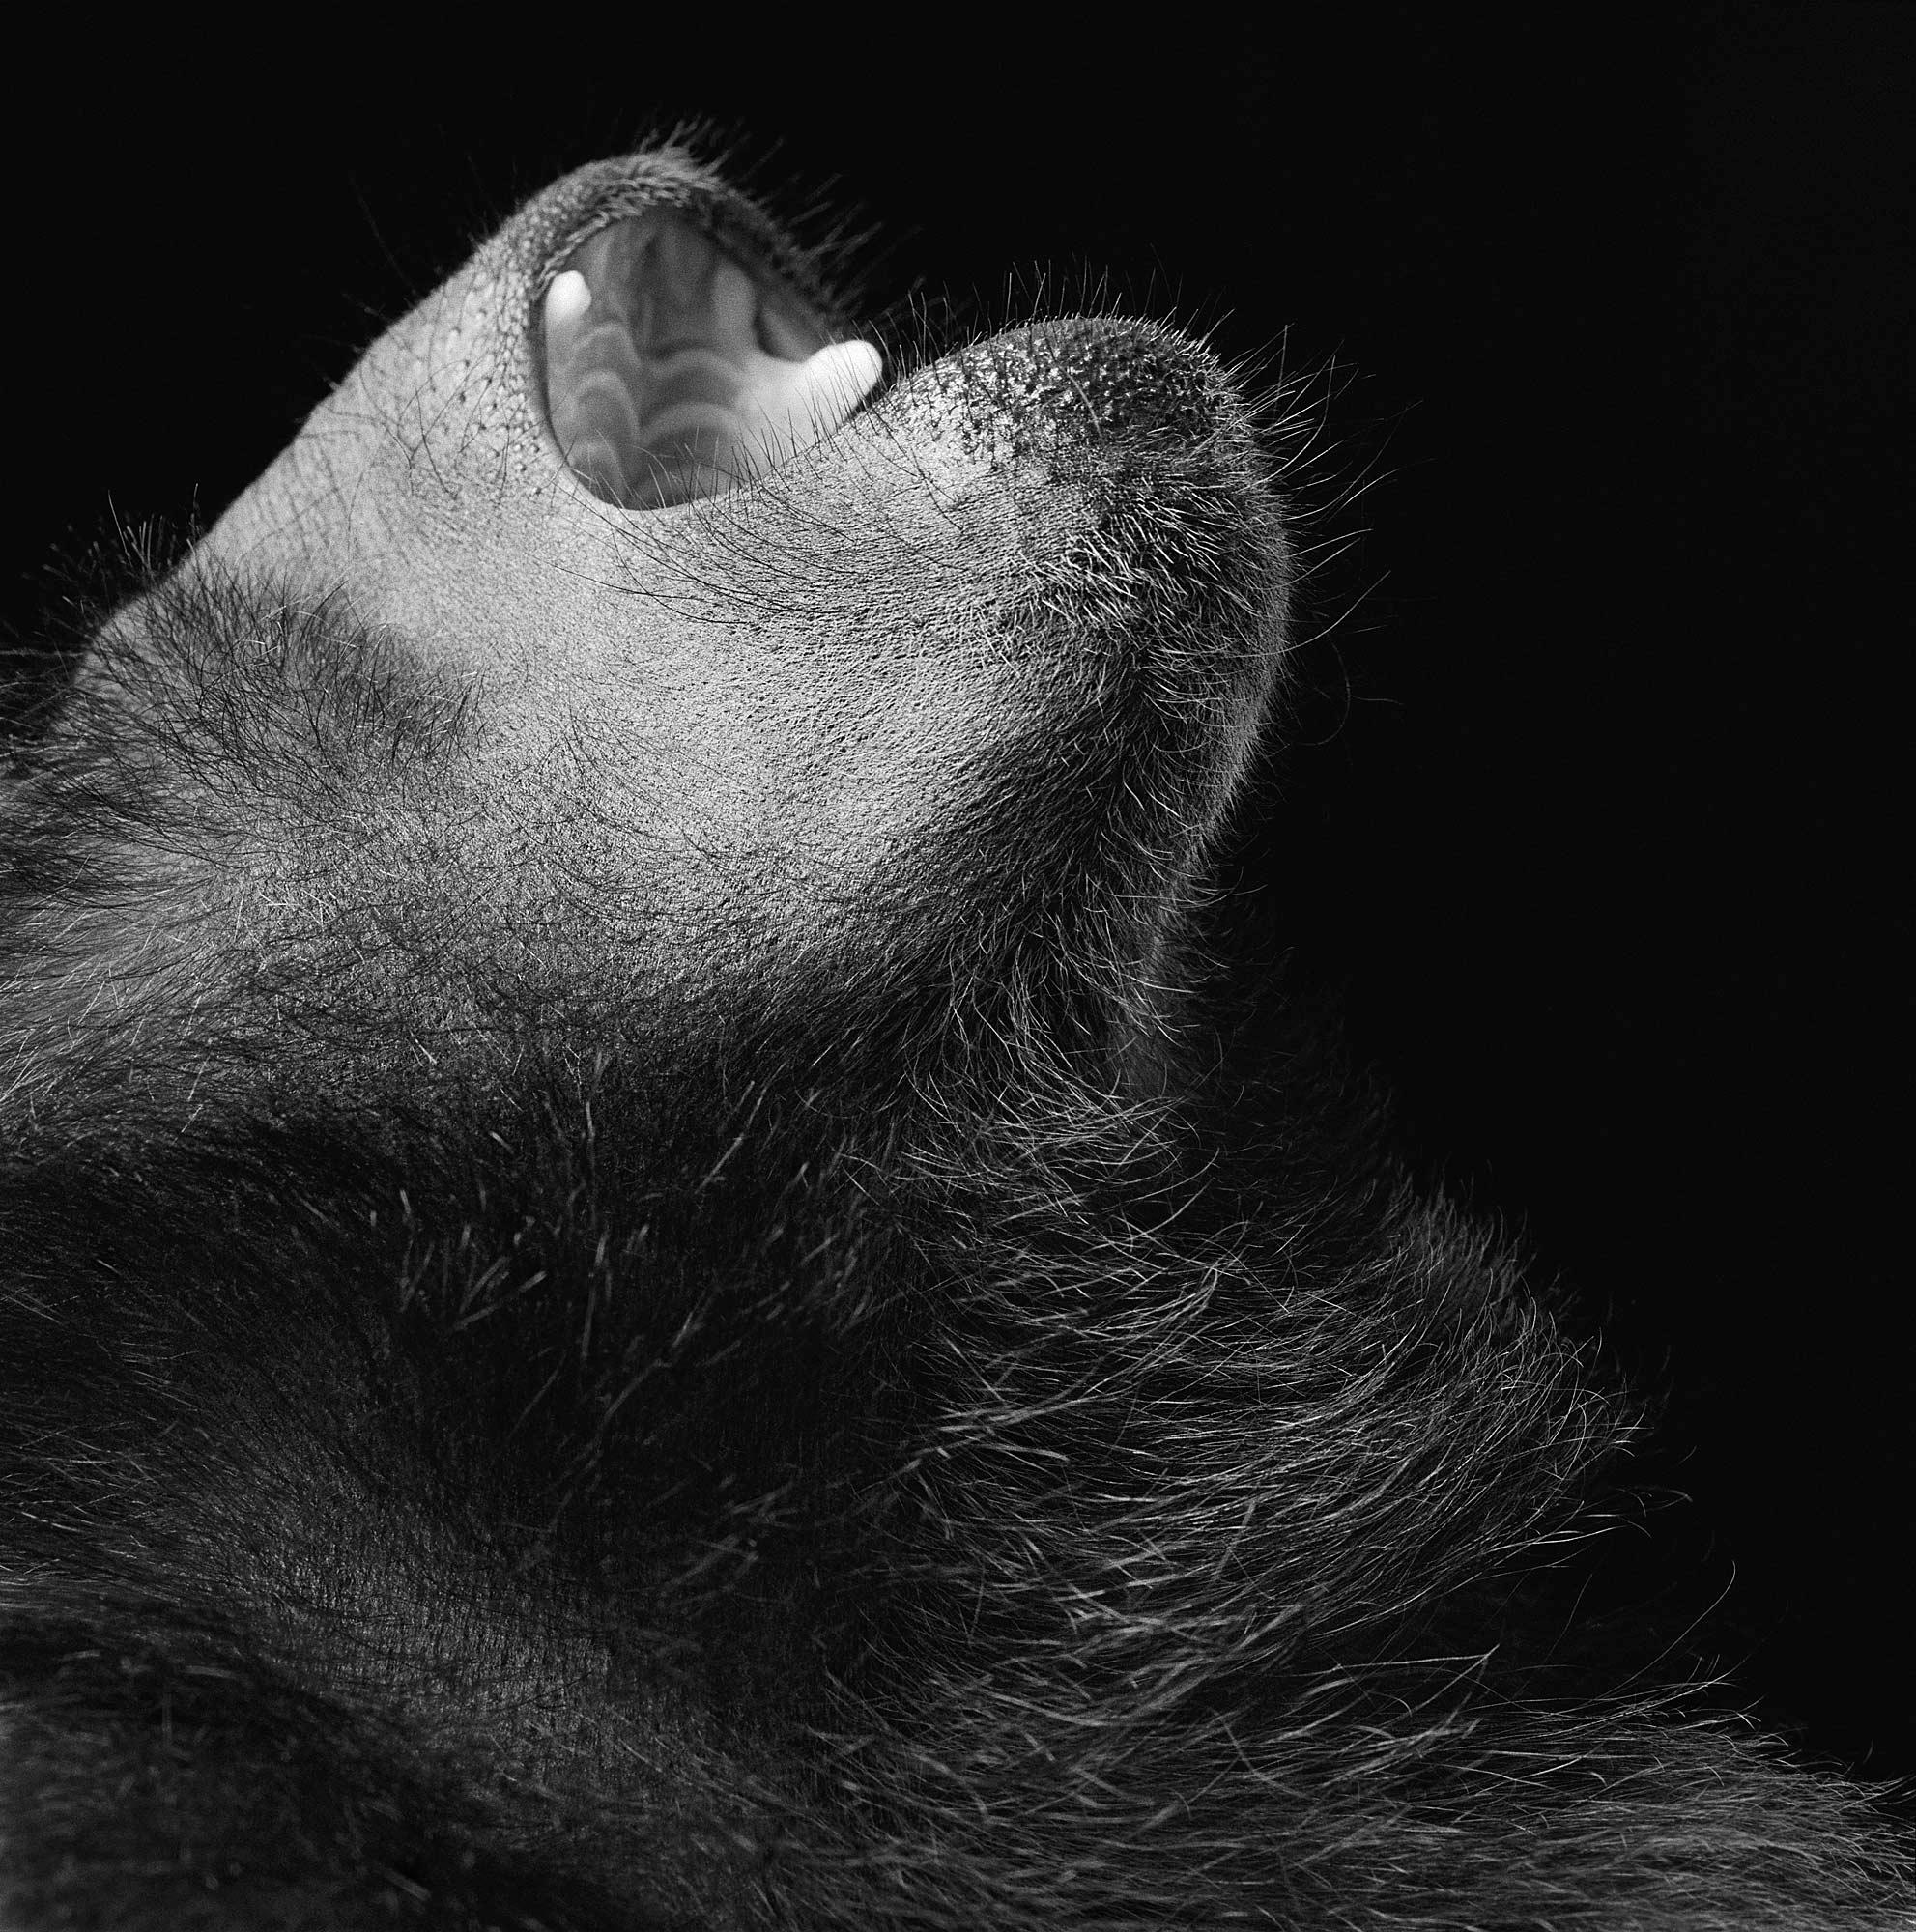 Monkey Laughing - Contemporary British Art, Animal Photography, Tim Flach